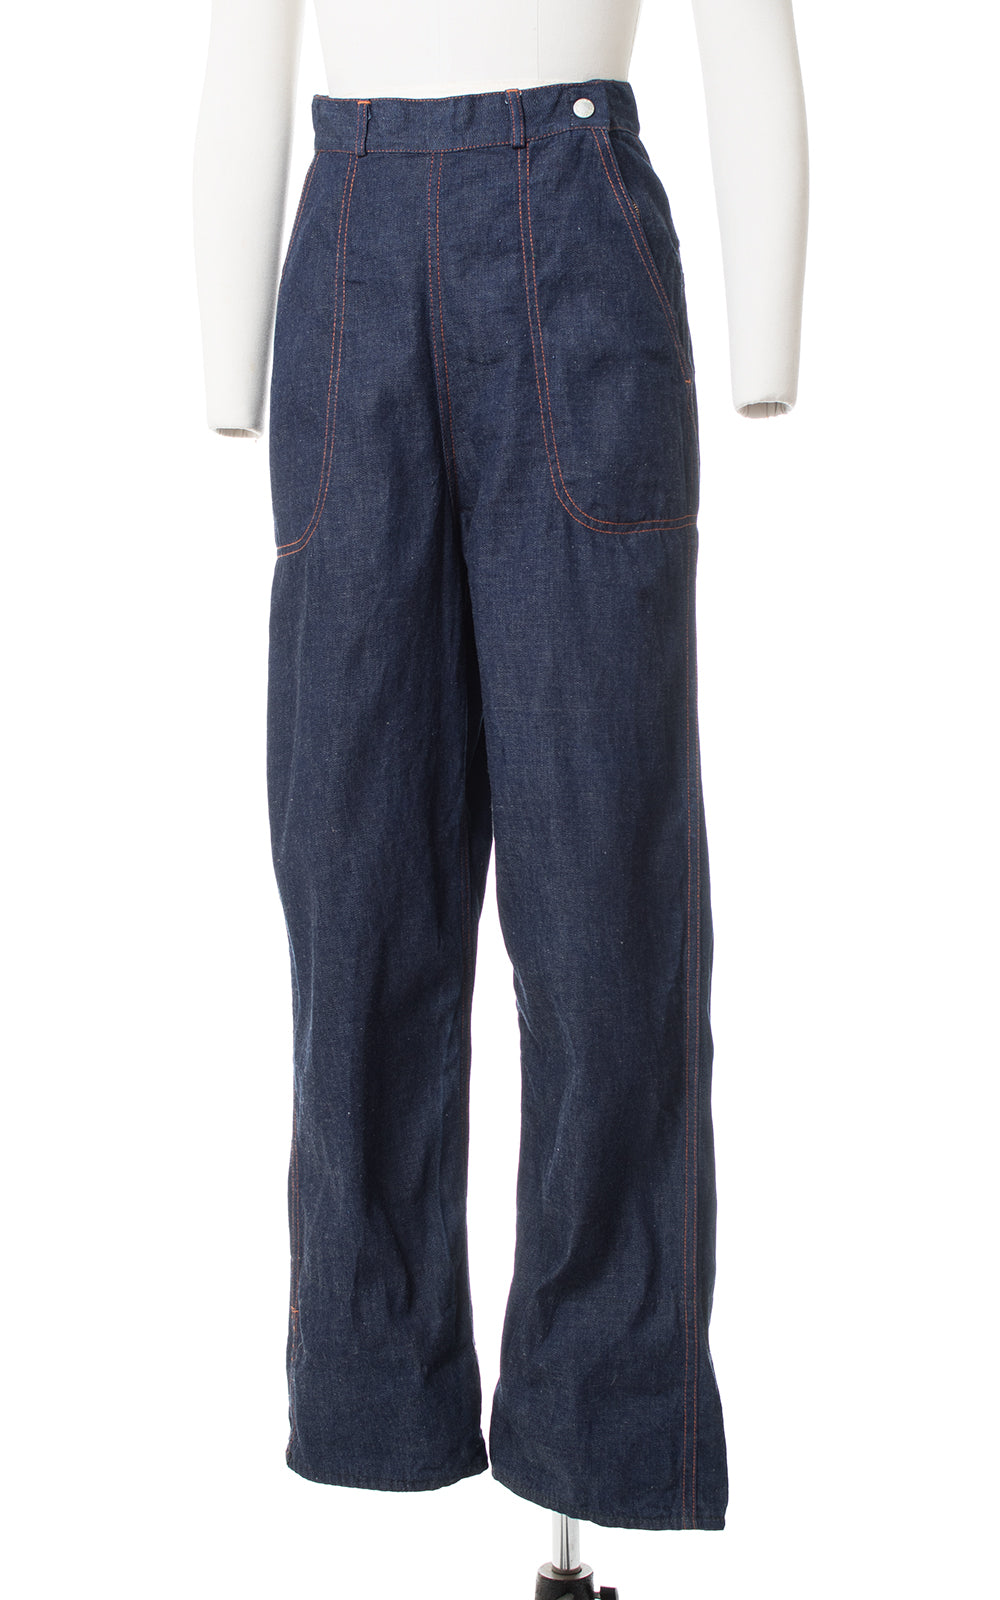 1950s Plaid Cuff Dark Denim Jeans